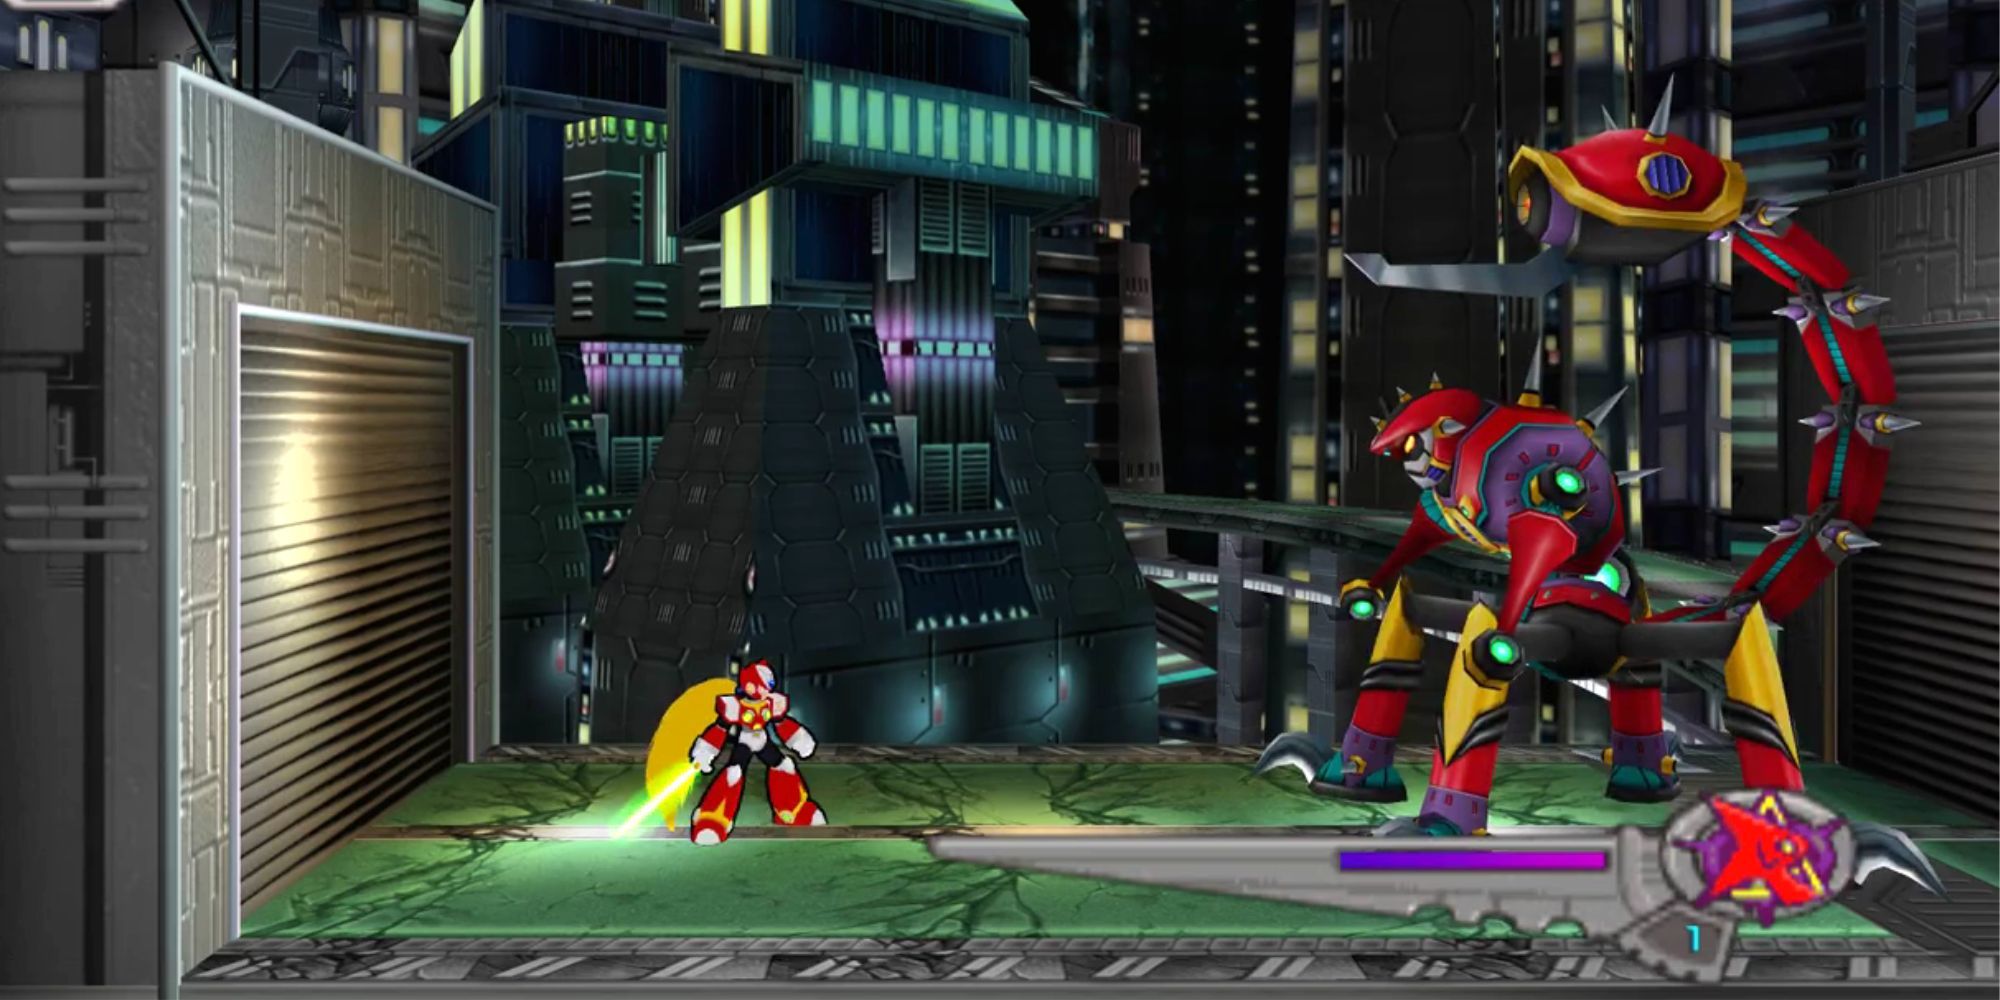 Boss Fight in Mega Man X7